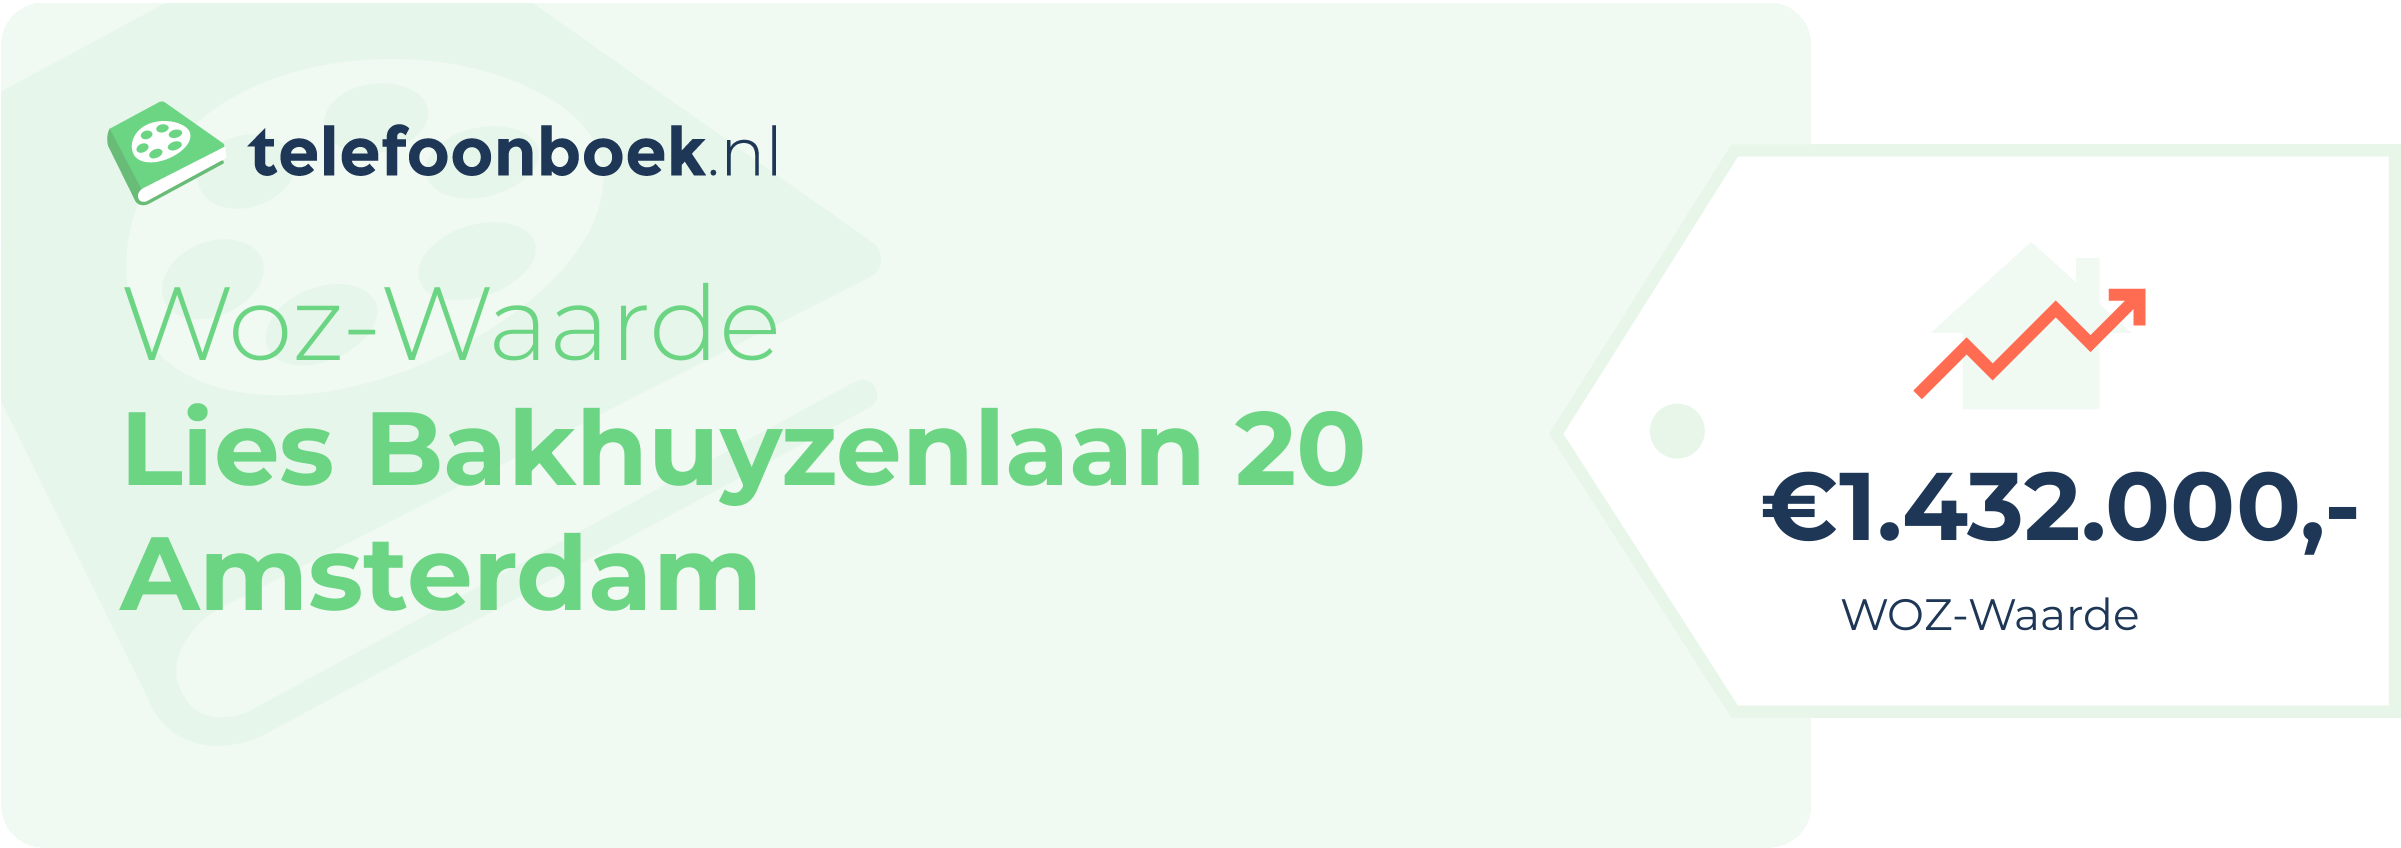 WOZ-waarde Lies Bakhuyzenlaan 20 Amsterdam